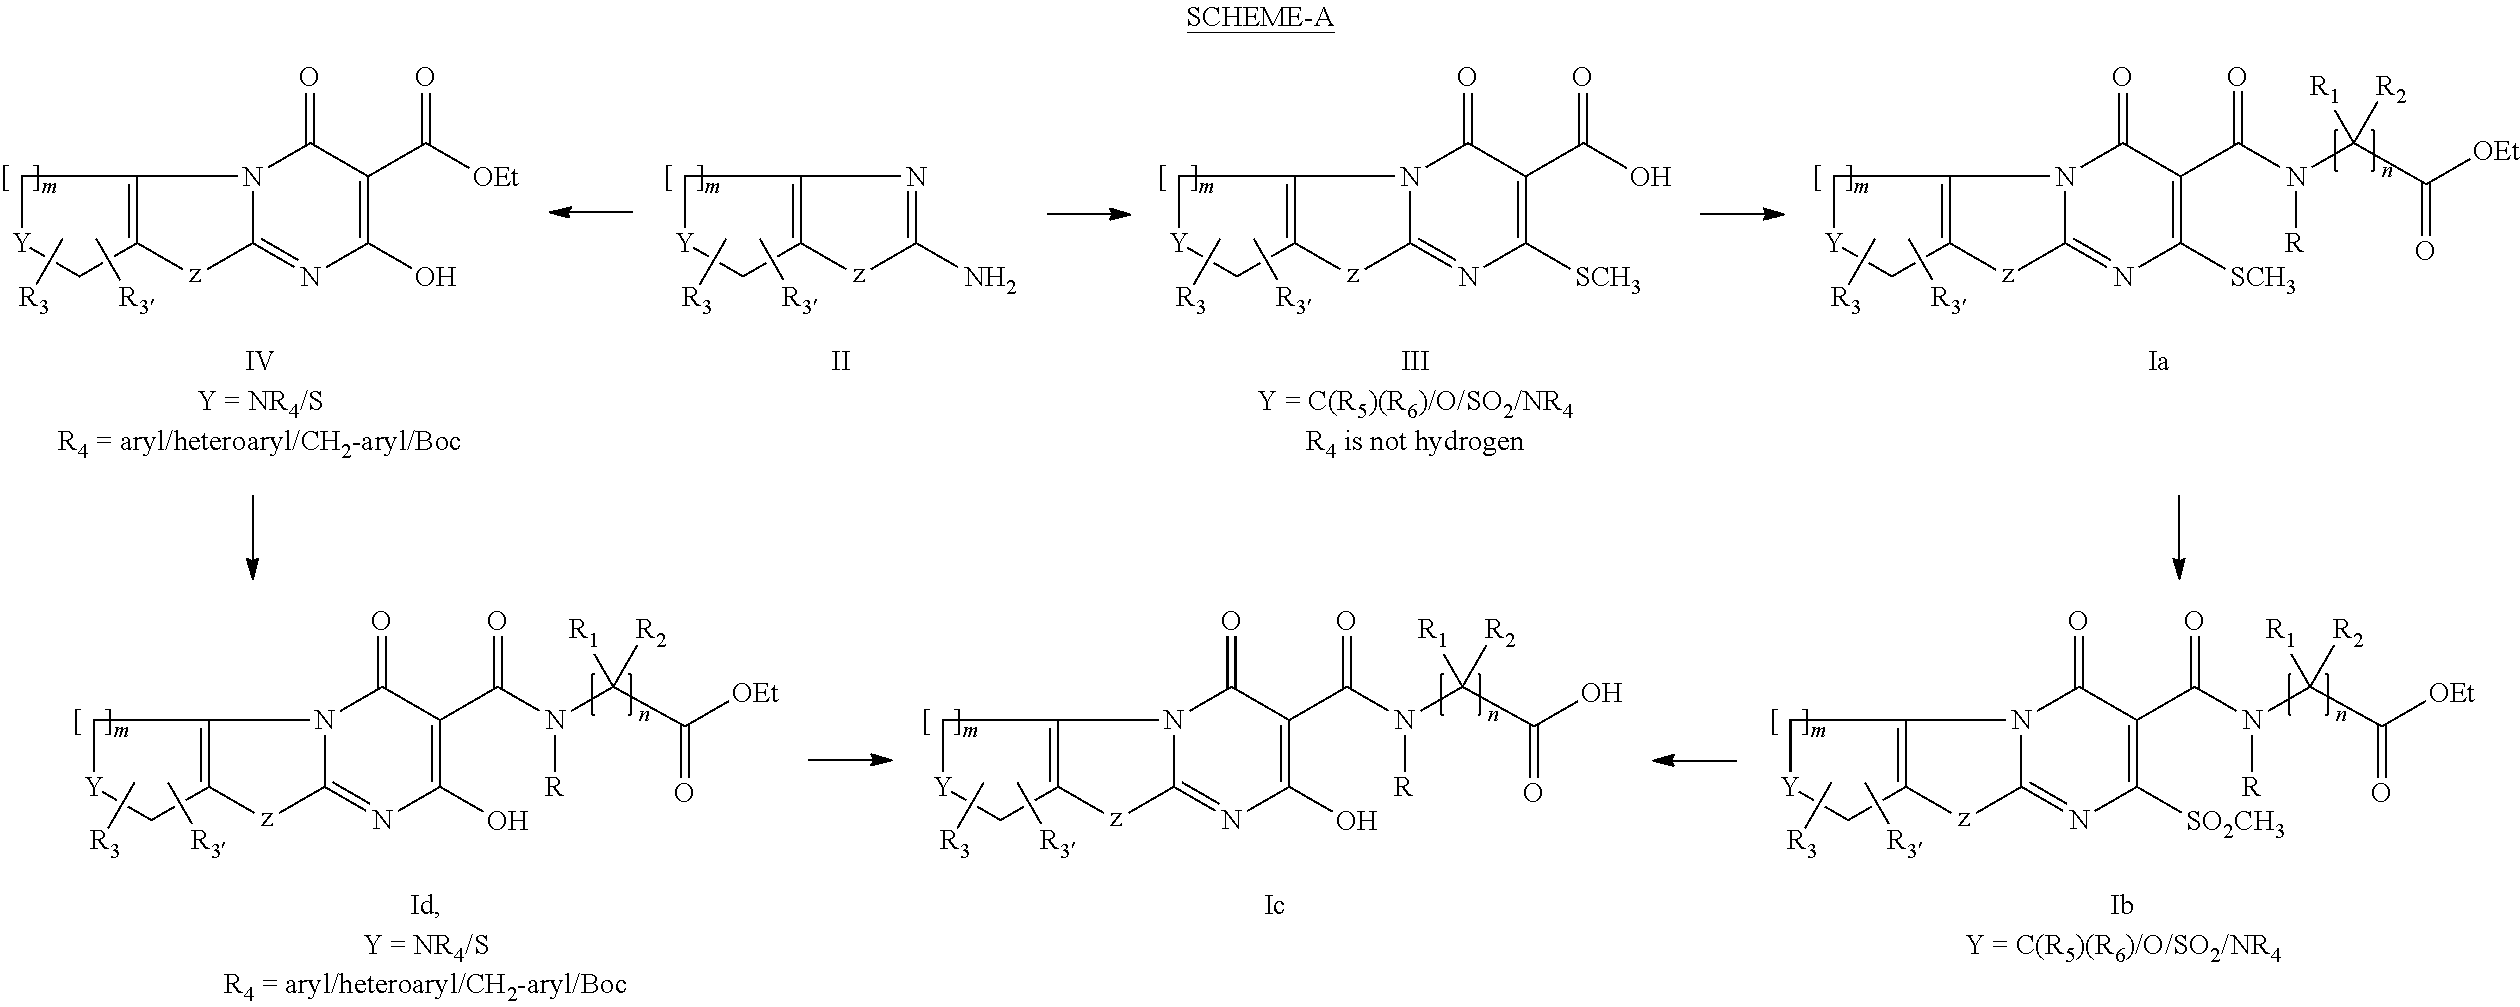 Novel fused thiazolo and oxazolo pyrimidinones